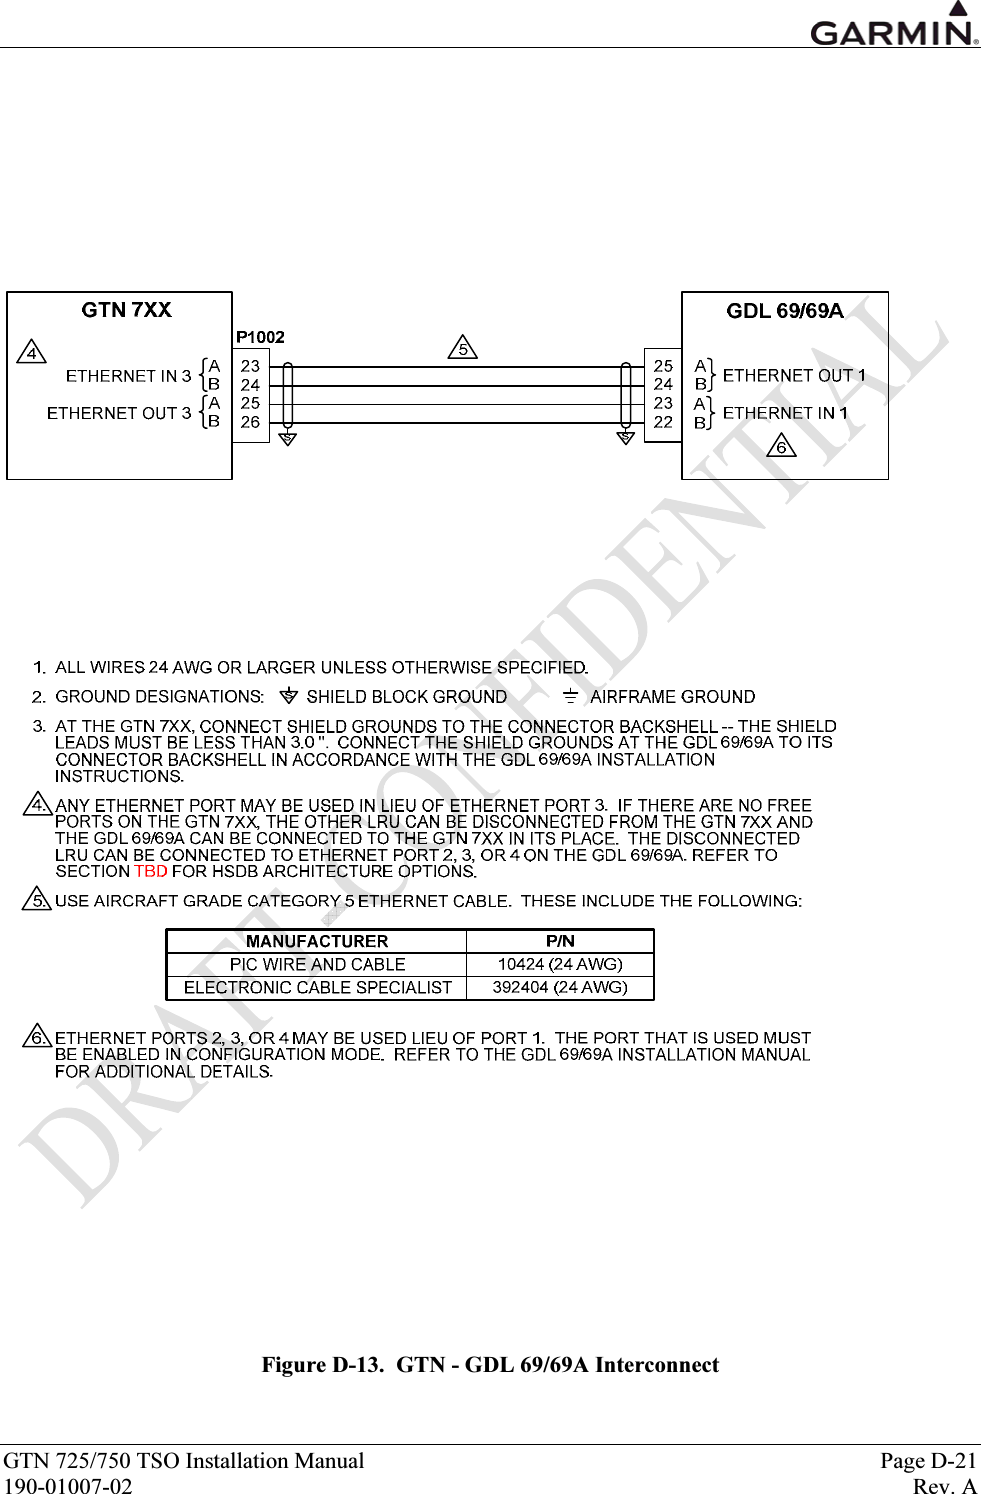  GTN 725/750 TSO Installation Manual  Page D-21 190-01007-02  Rev. A  Figure D-13.  GTN - GDL 69/69A Interconnect 